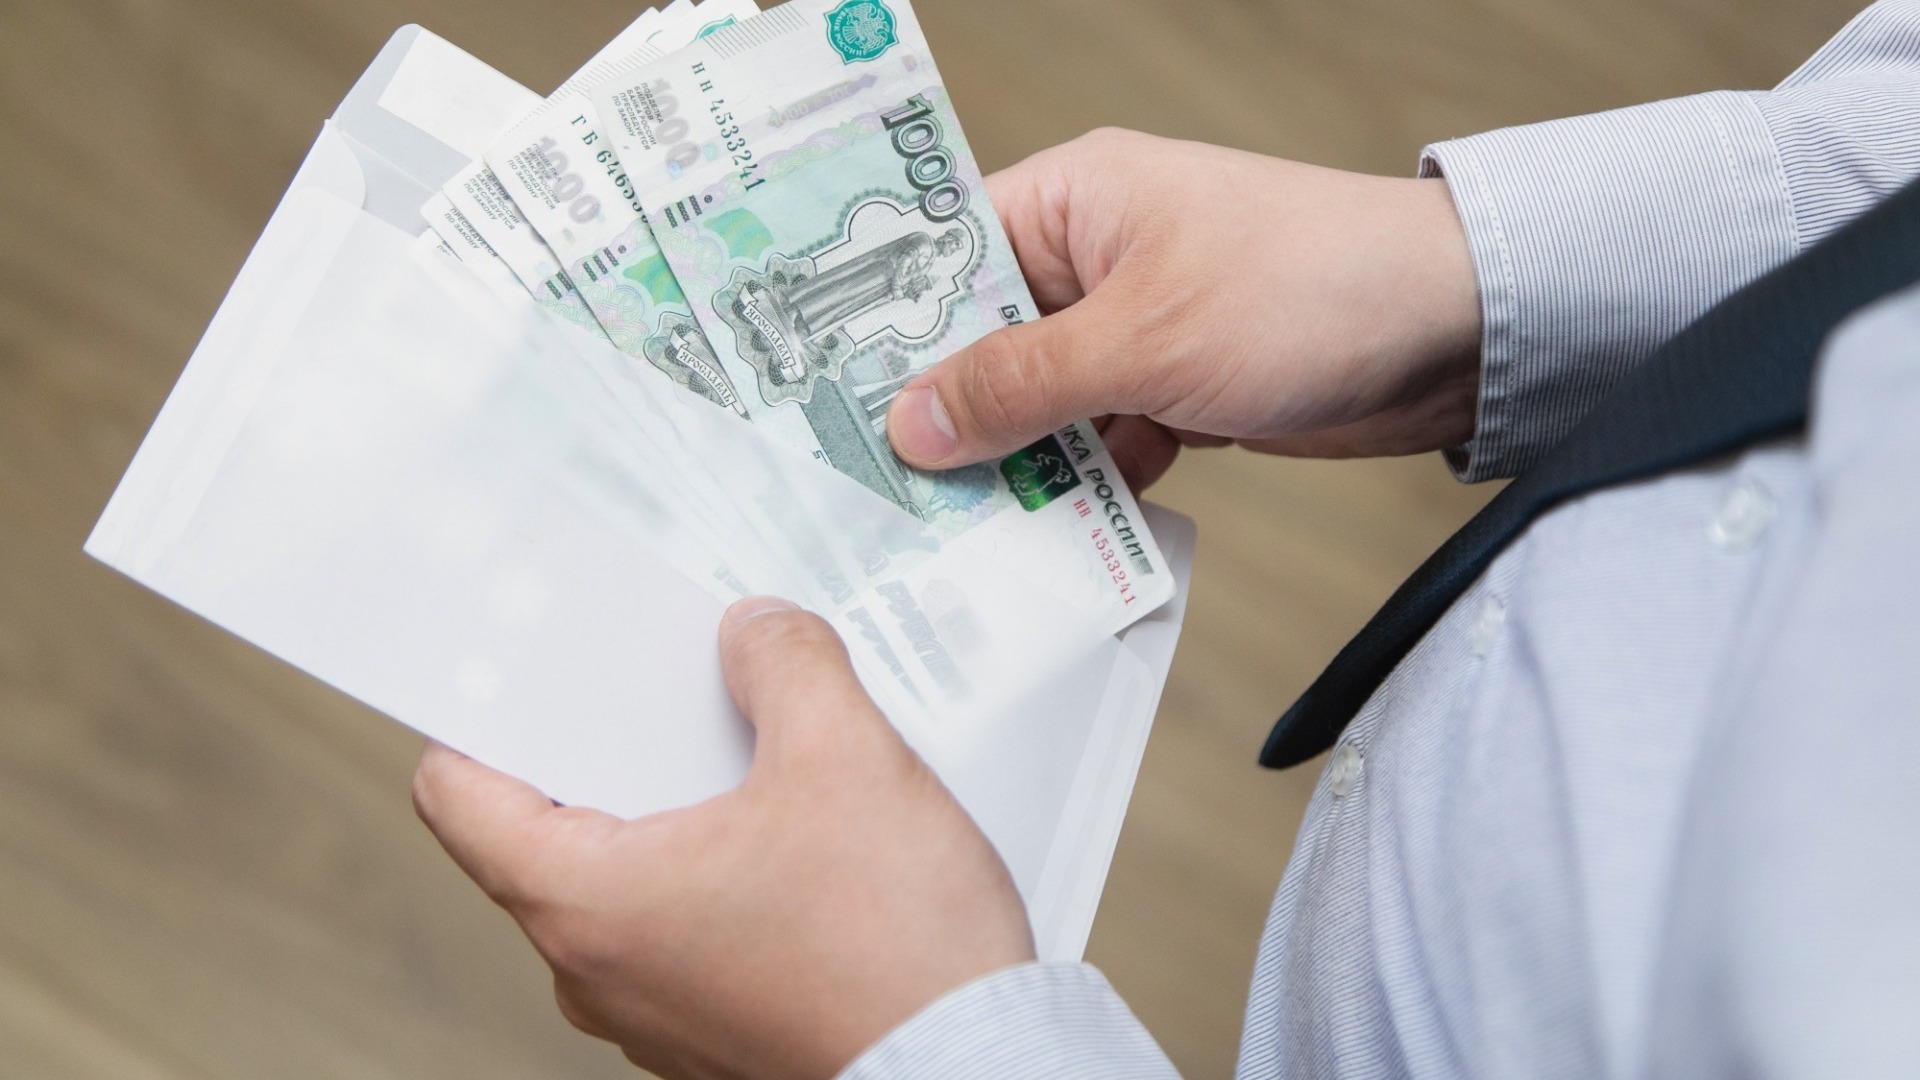 ООО ПКФ «Оргхимпром» оштрафовано на 560 тысяч рублей